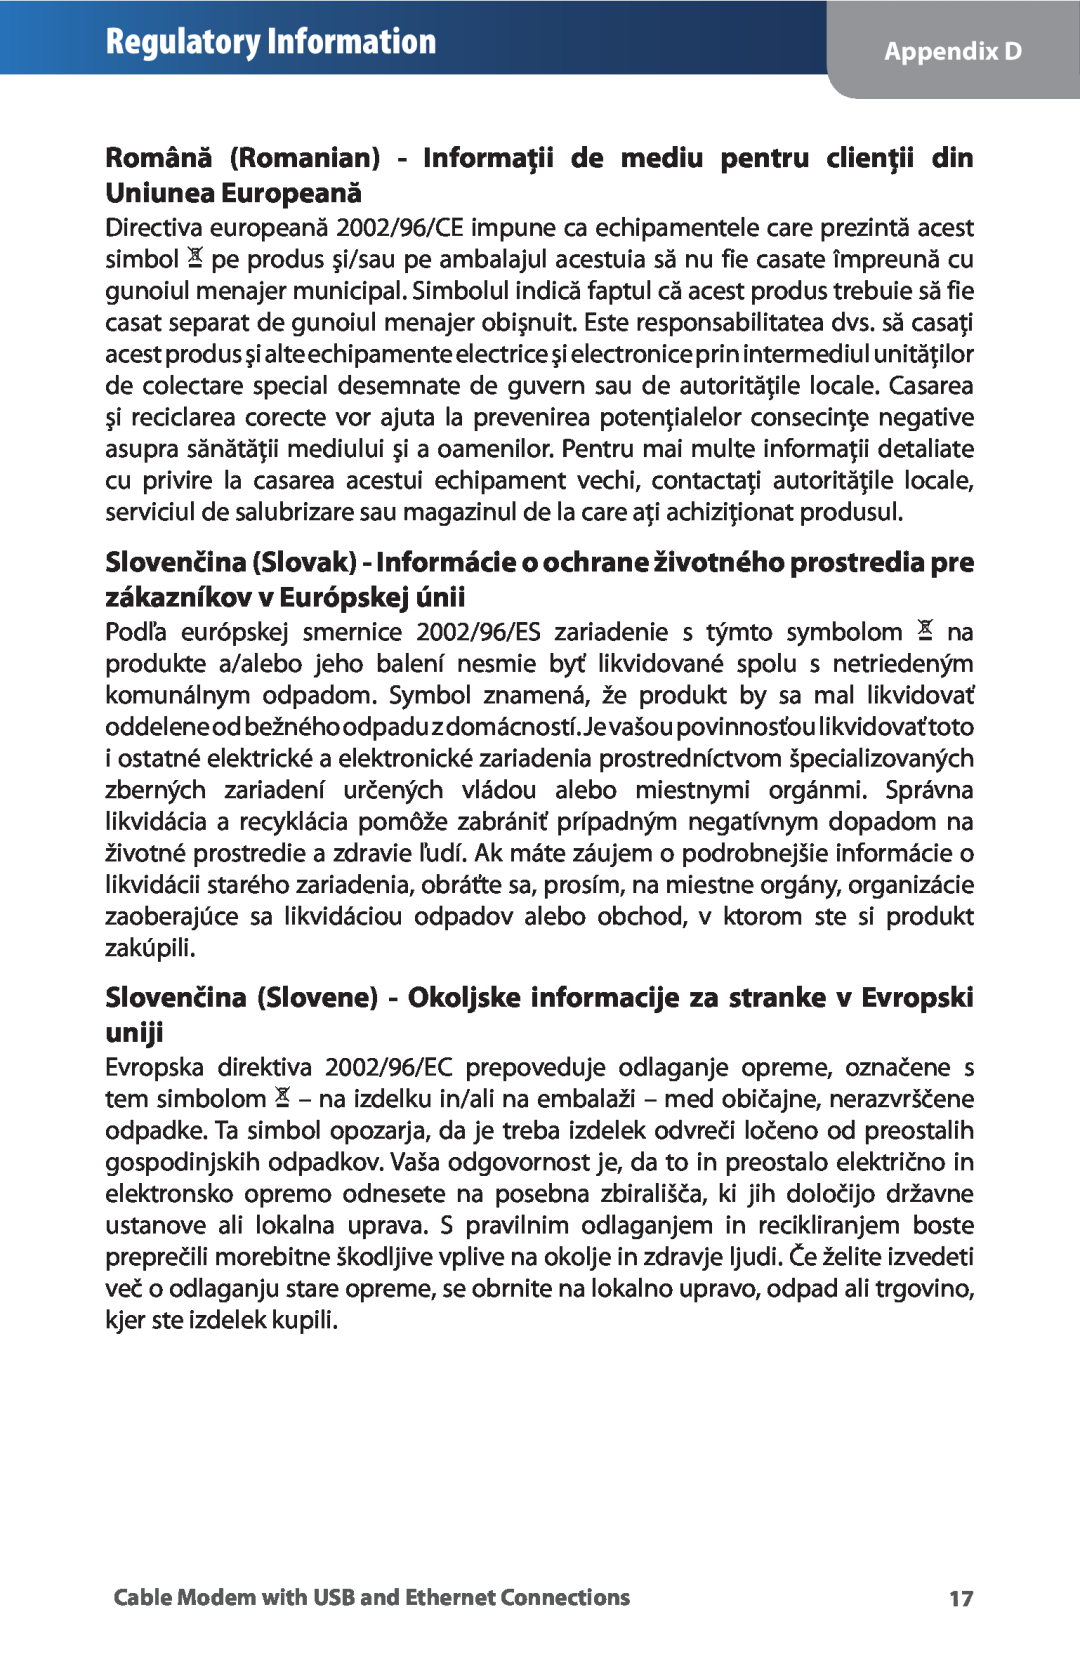 Linksys CM100 manual Regulatory Information, Slovenčina Slovene - Okoljske informacije za stranke v Evropski uniji 